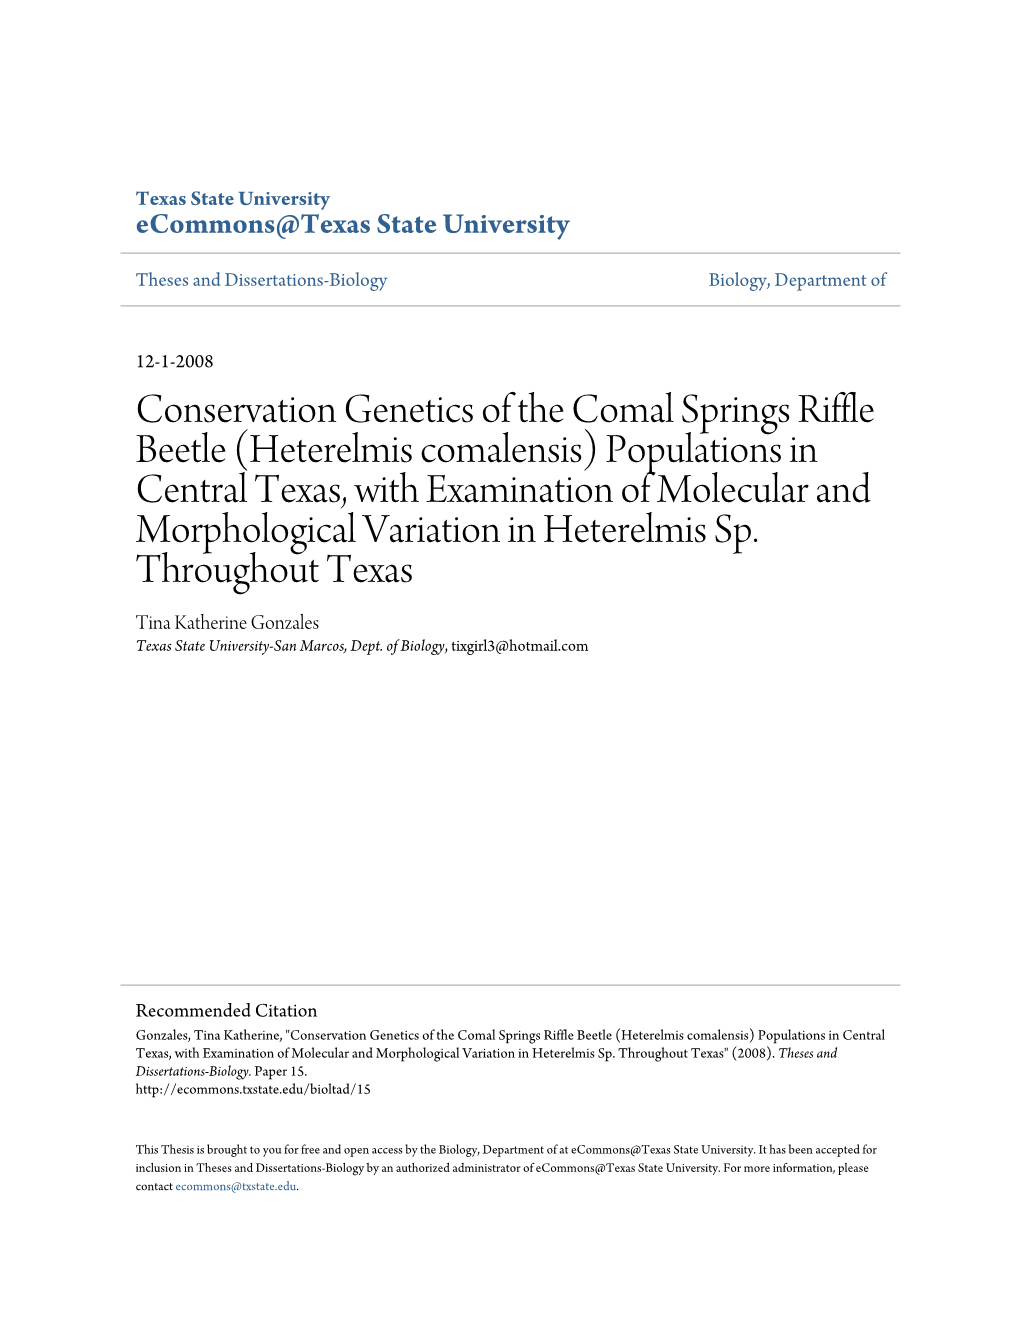 Conservation Genetics of the Comal Springs Riffle Beetle (Heterelmis